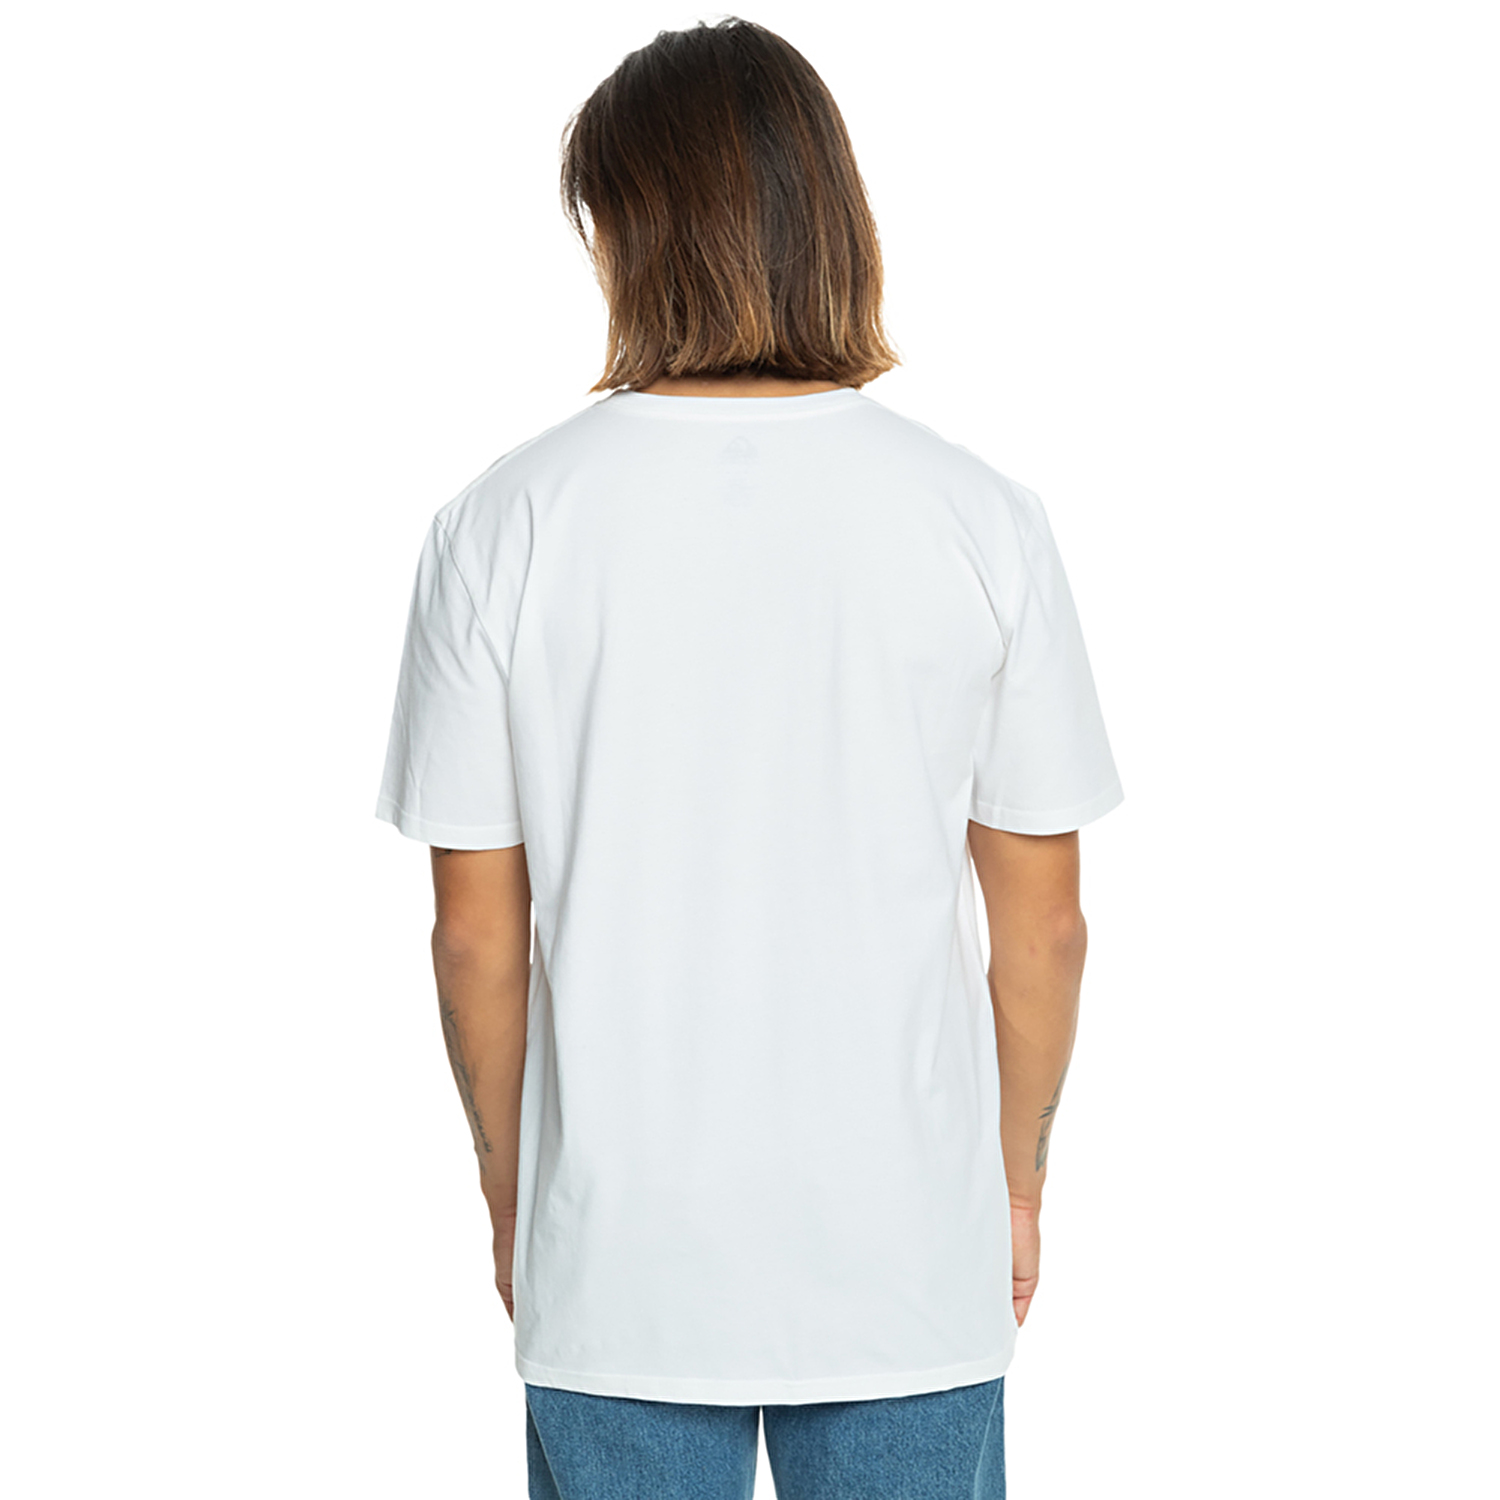 Quiksilver Omni Fill Erkek Kısa Kollu T-Shirt